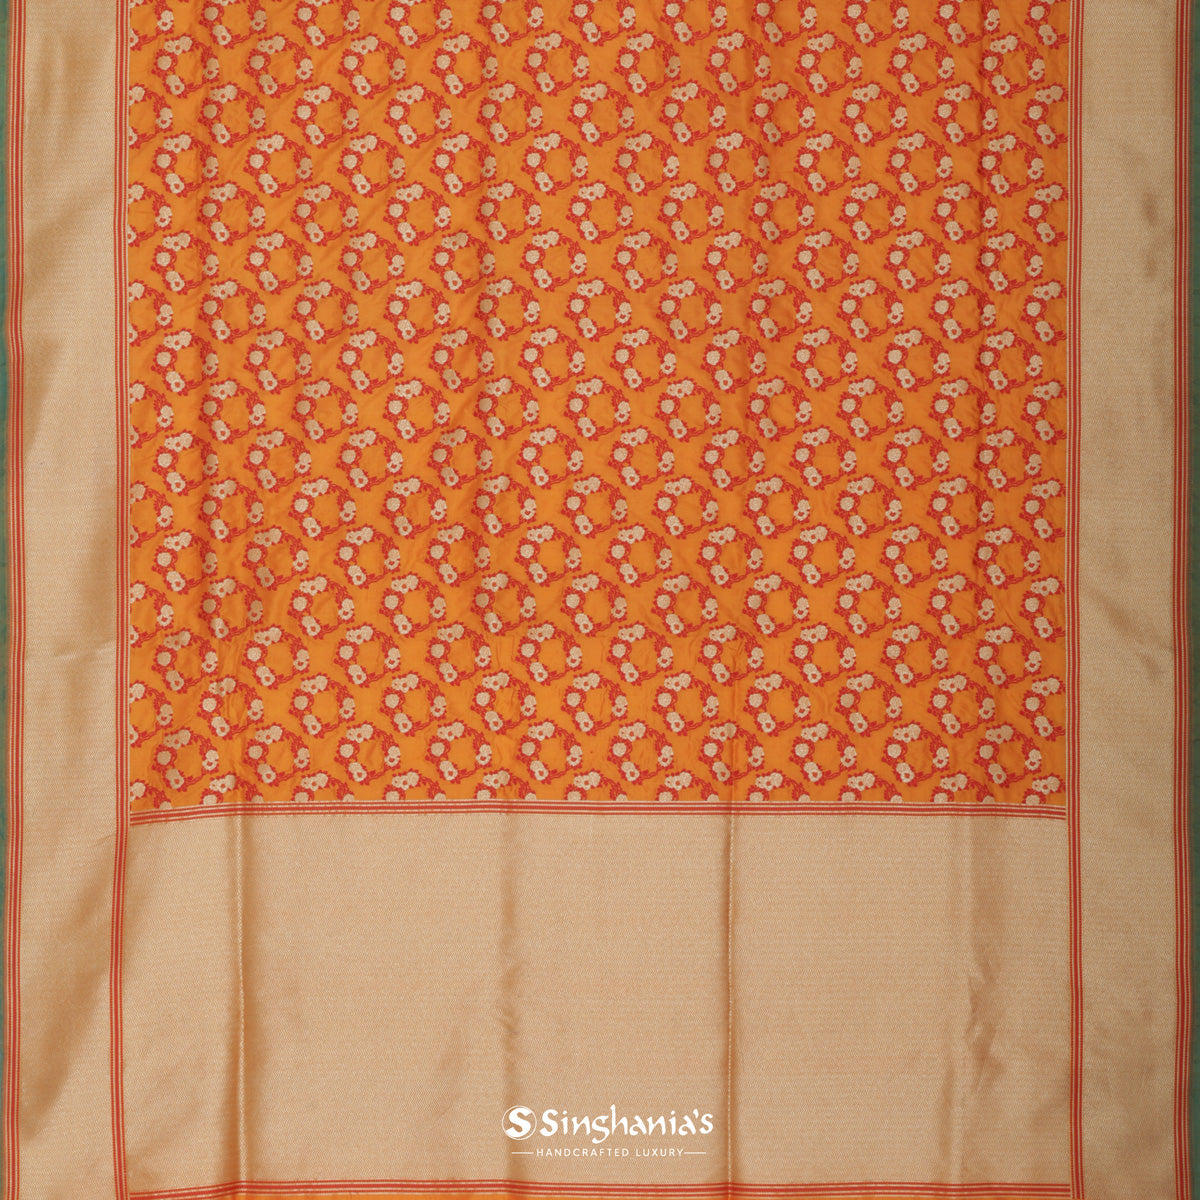 Yellow-Orange Banarasi Silk Saree With Floral Buttas Weaving